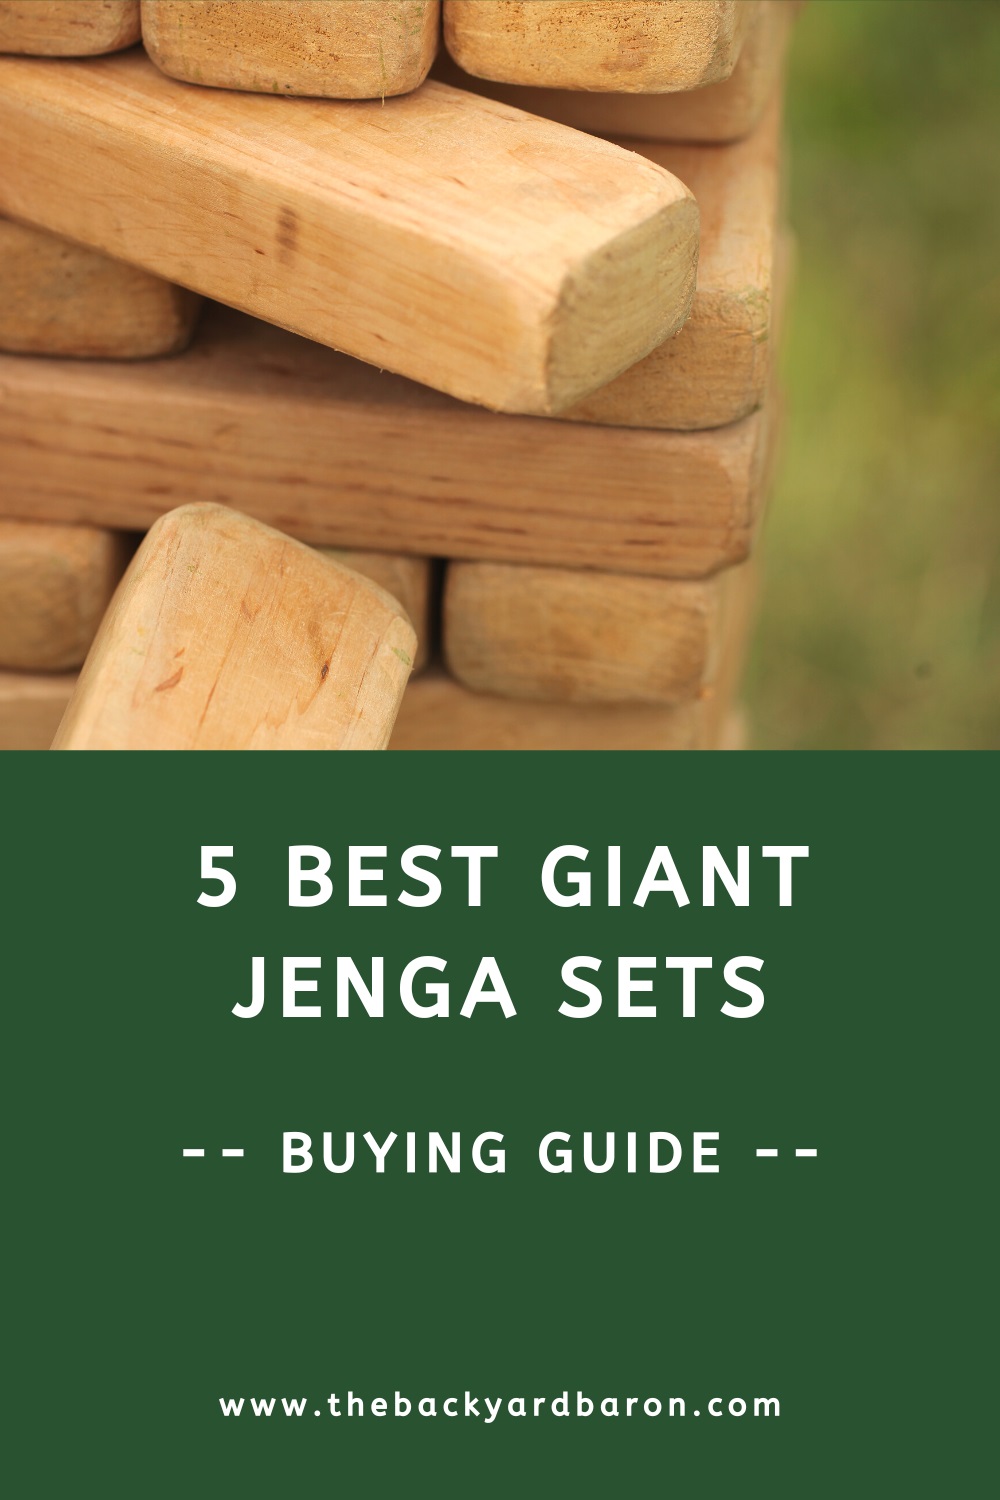 Giant outdoor Jenga set buying guide